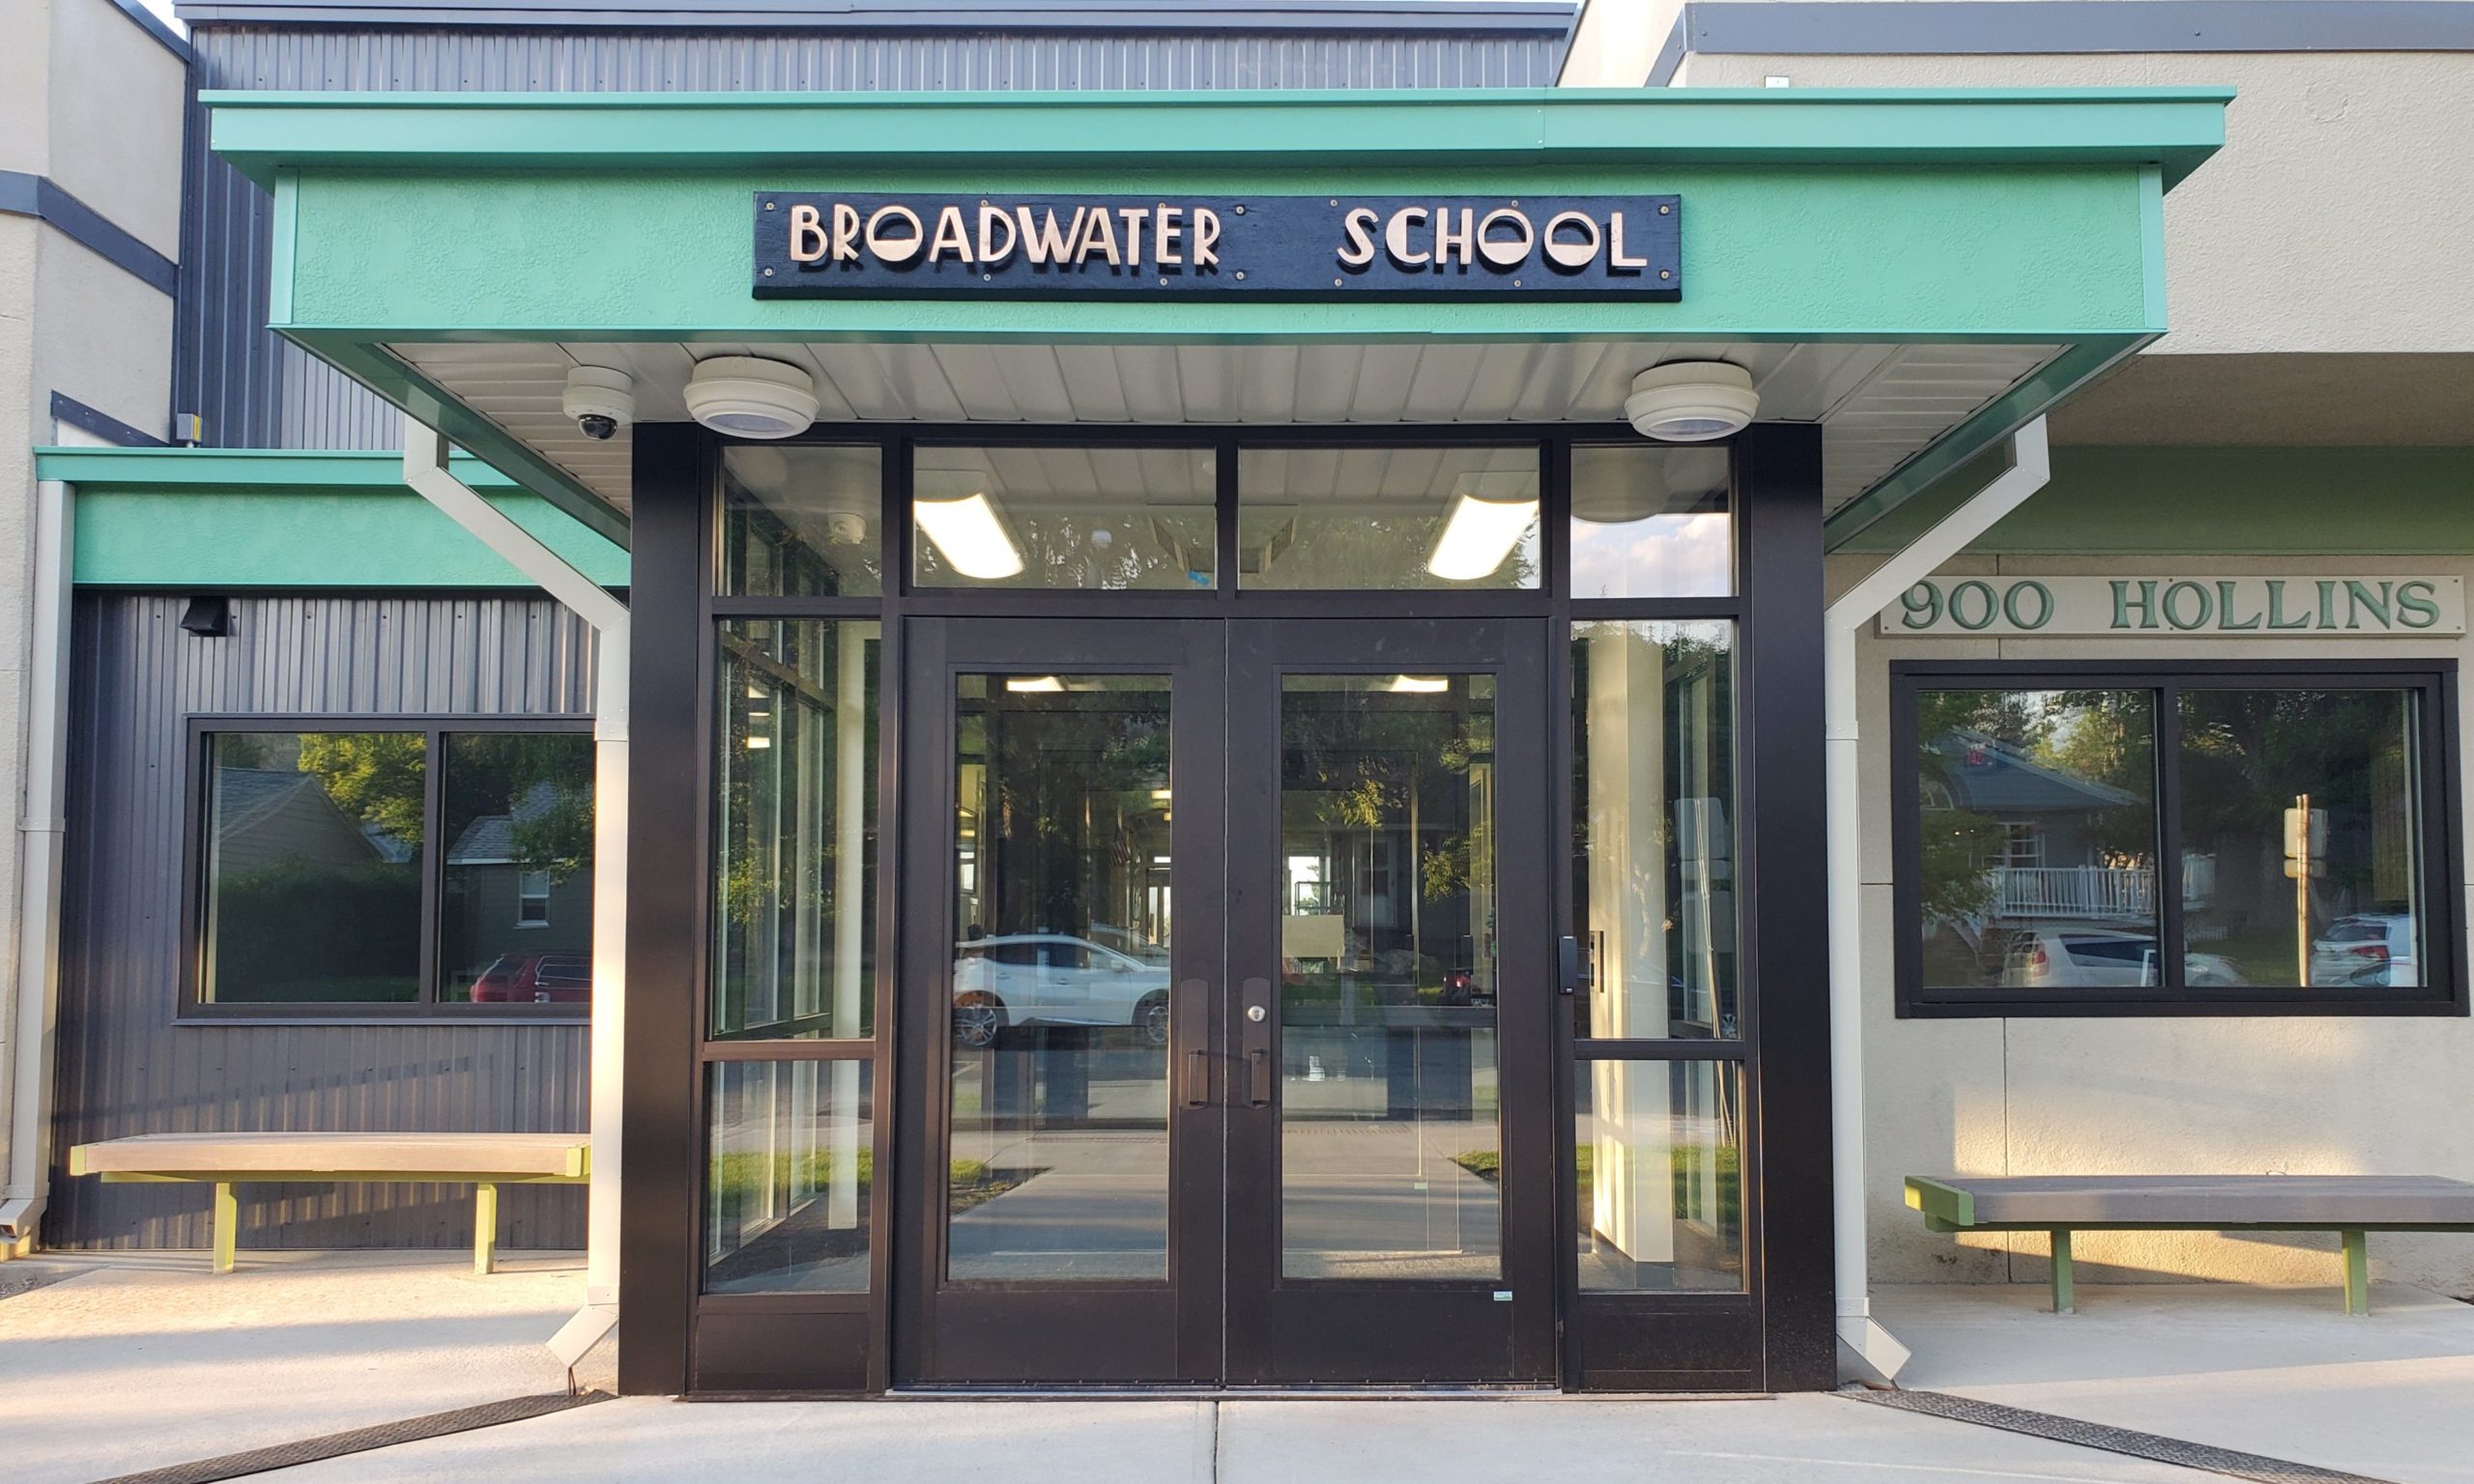 Broadwater Elementary